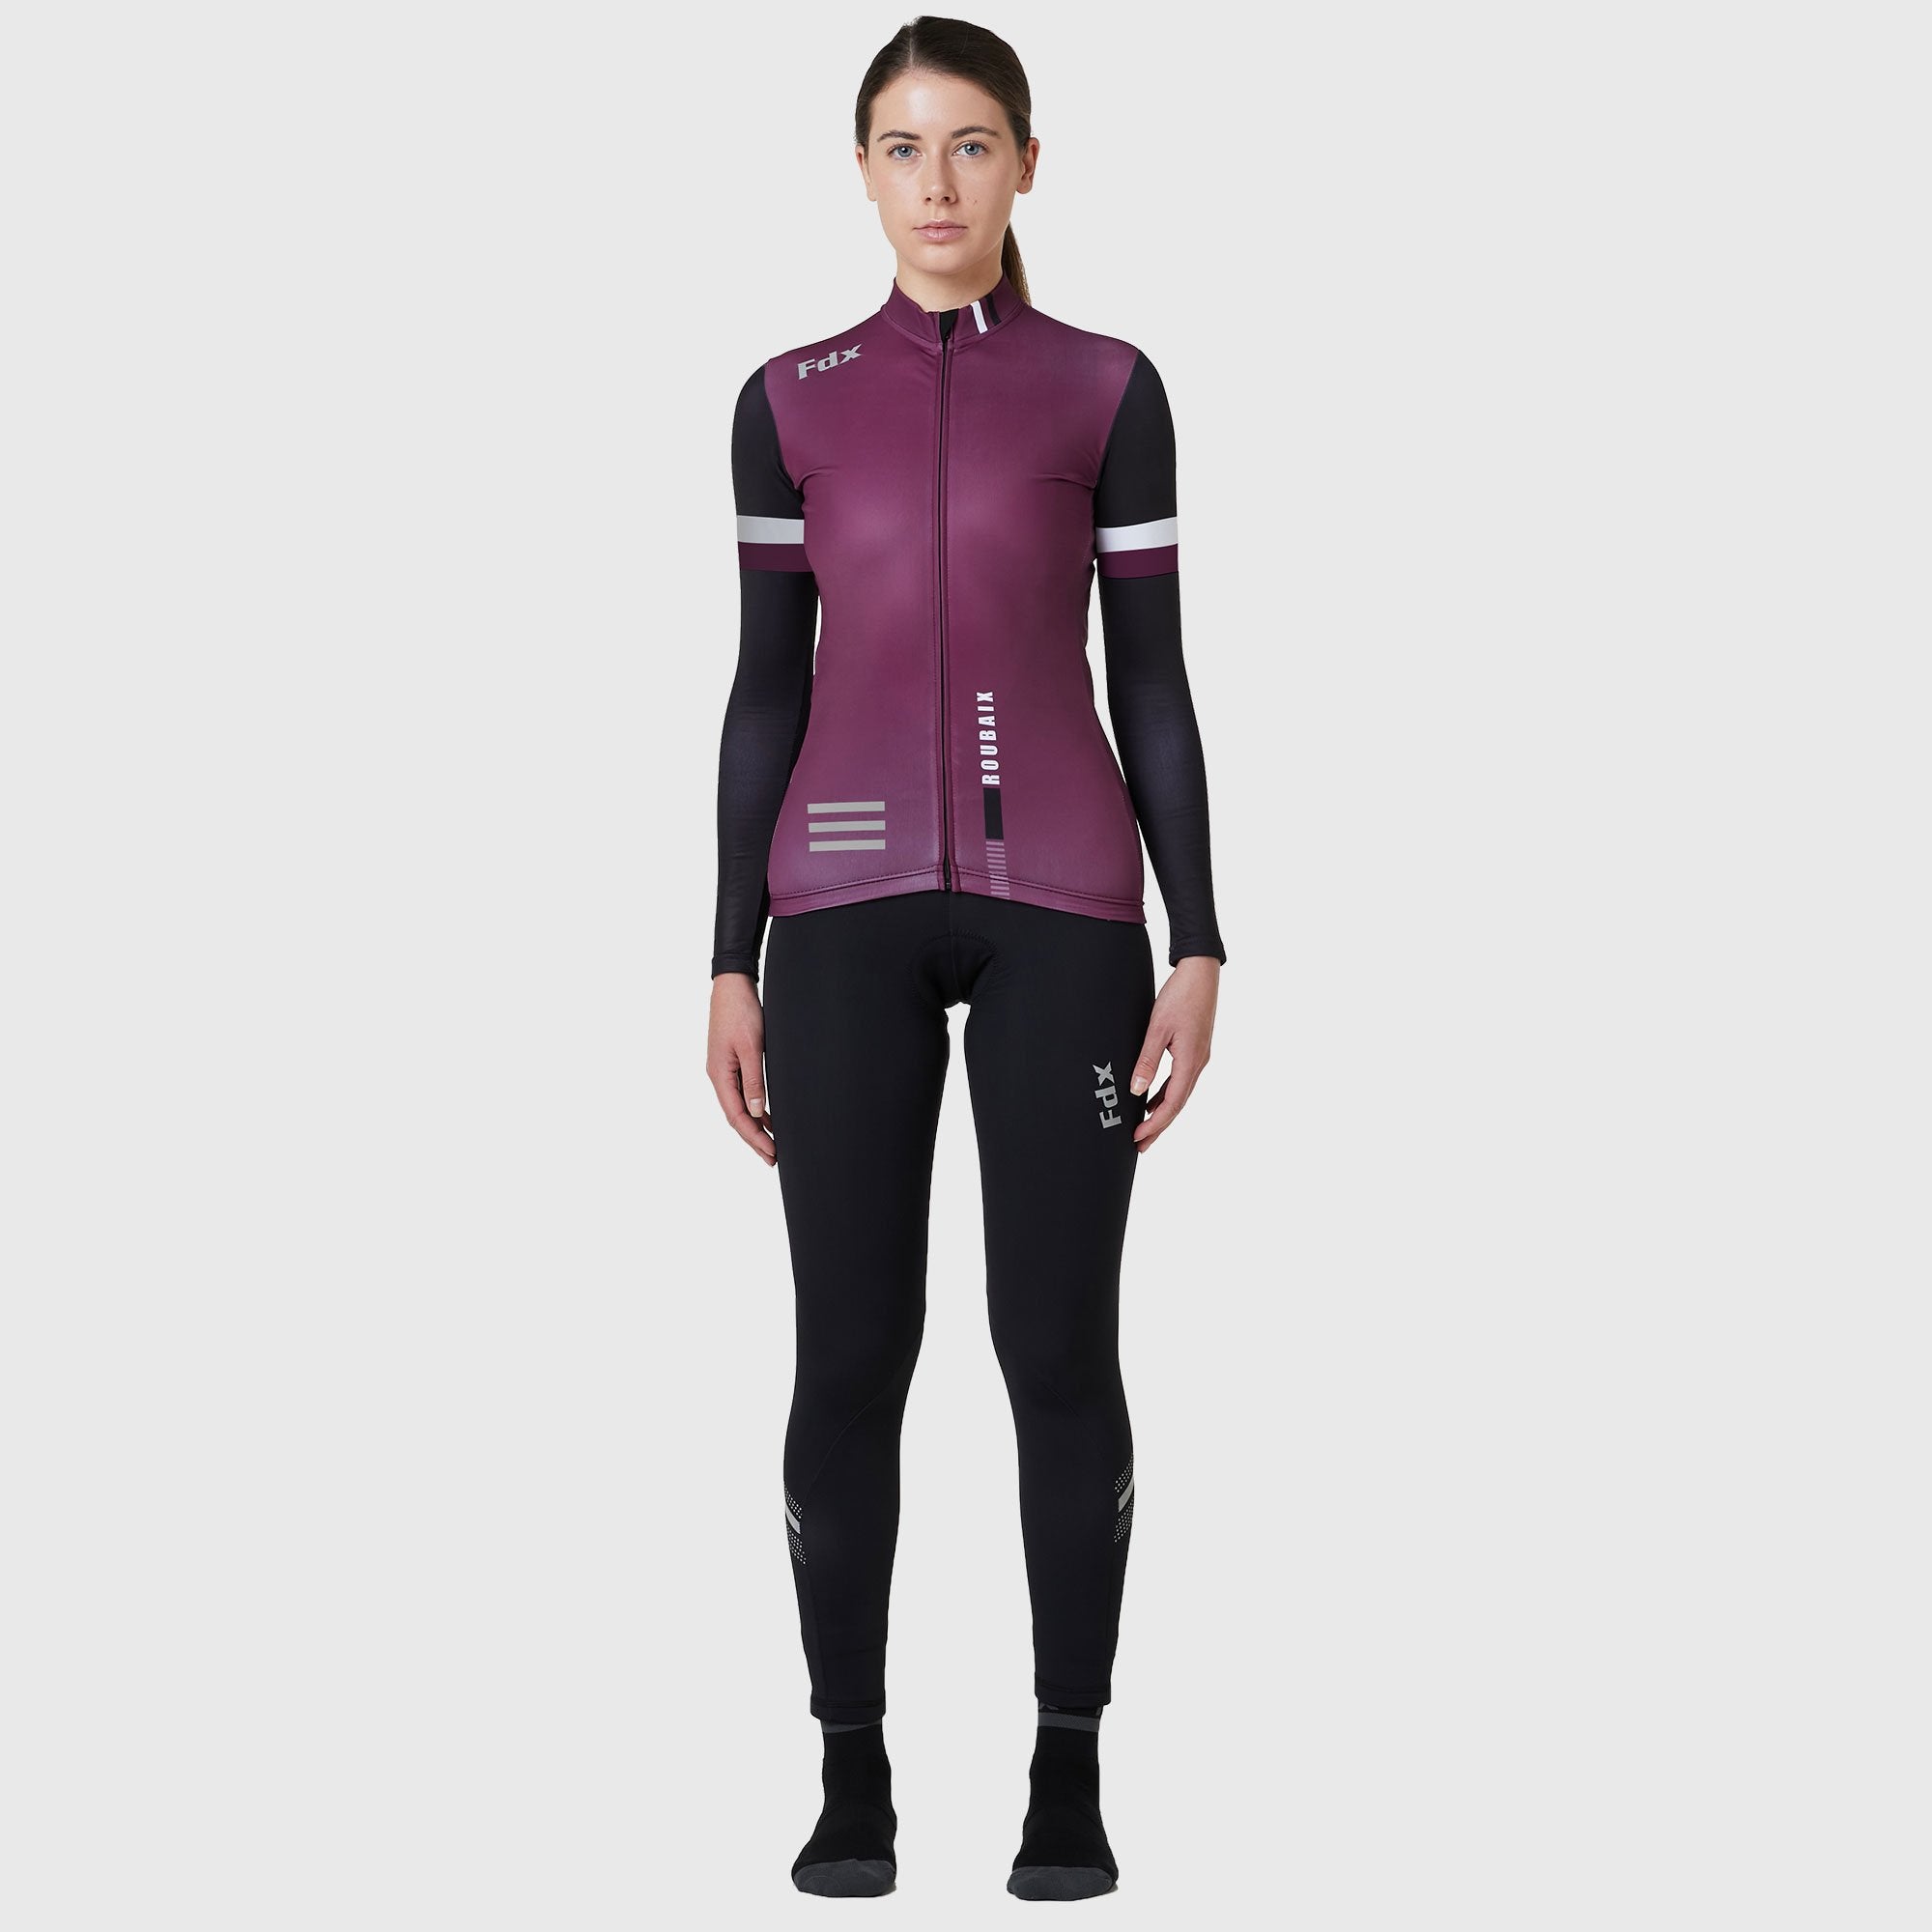 Fdx Women's Set Limited Edition Thermal Roubaix Long Sleeve Cycling Jersey & Bib Tights - Purple